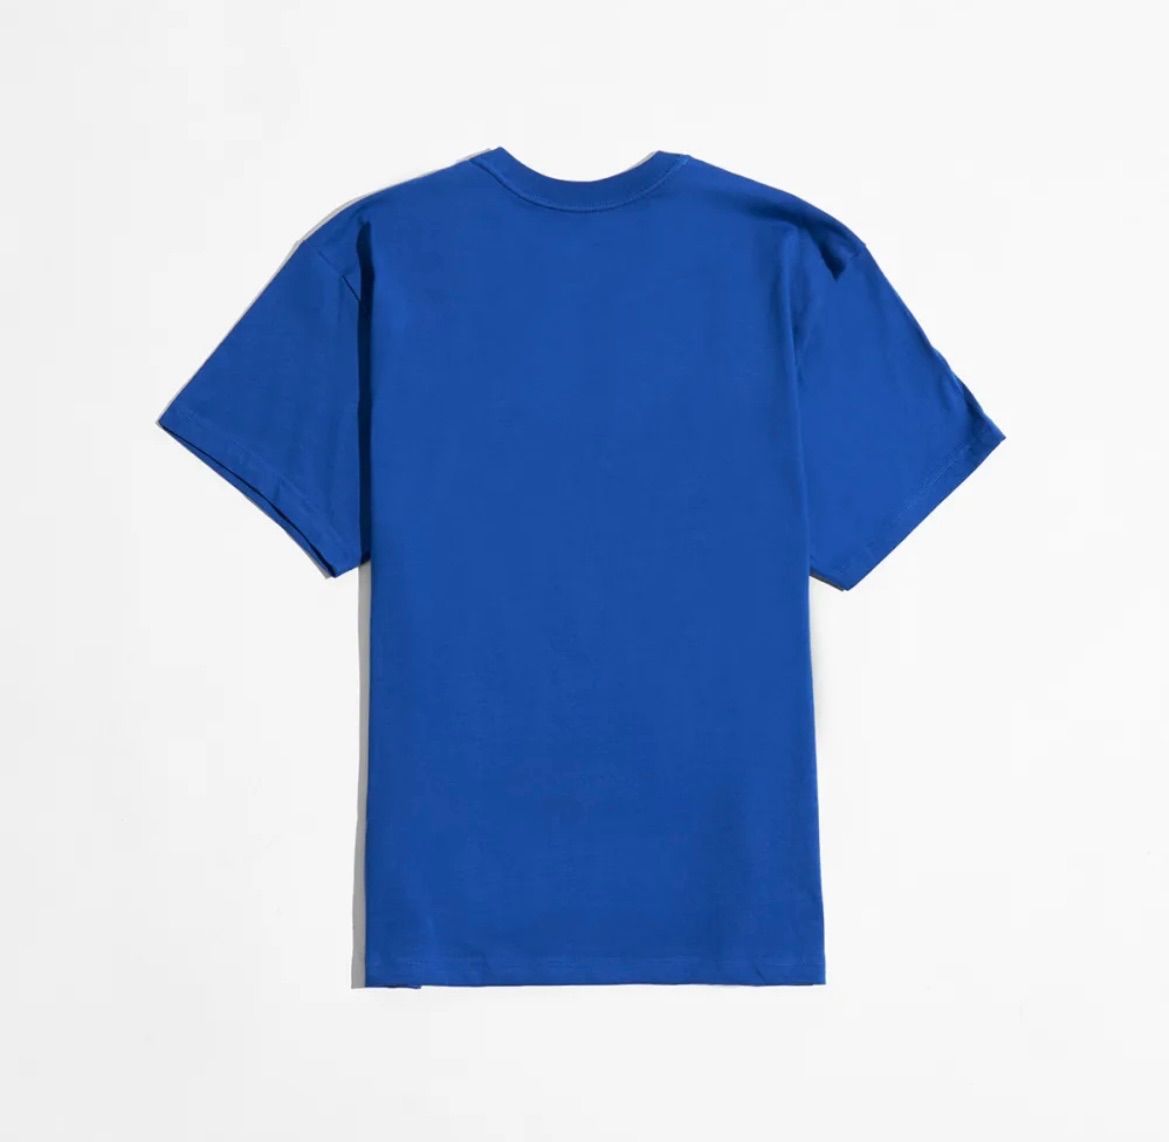 NWT The North Face x KAWS XX Short Sleeve T-shirt Size Large Logo Gravity  Purple